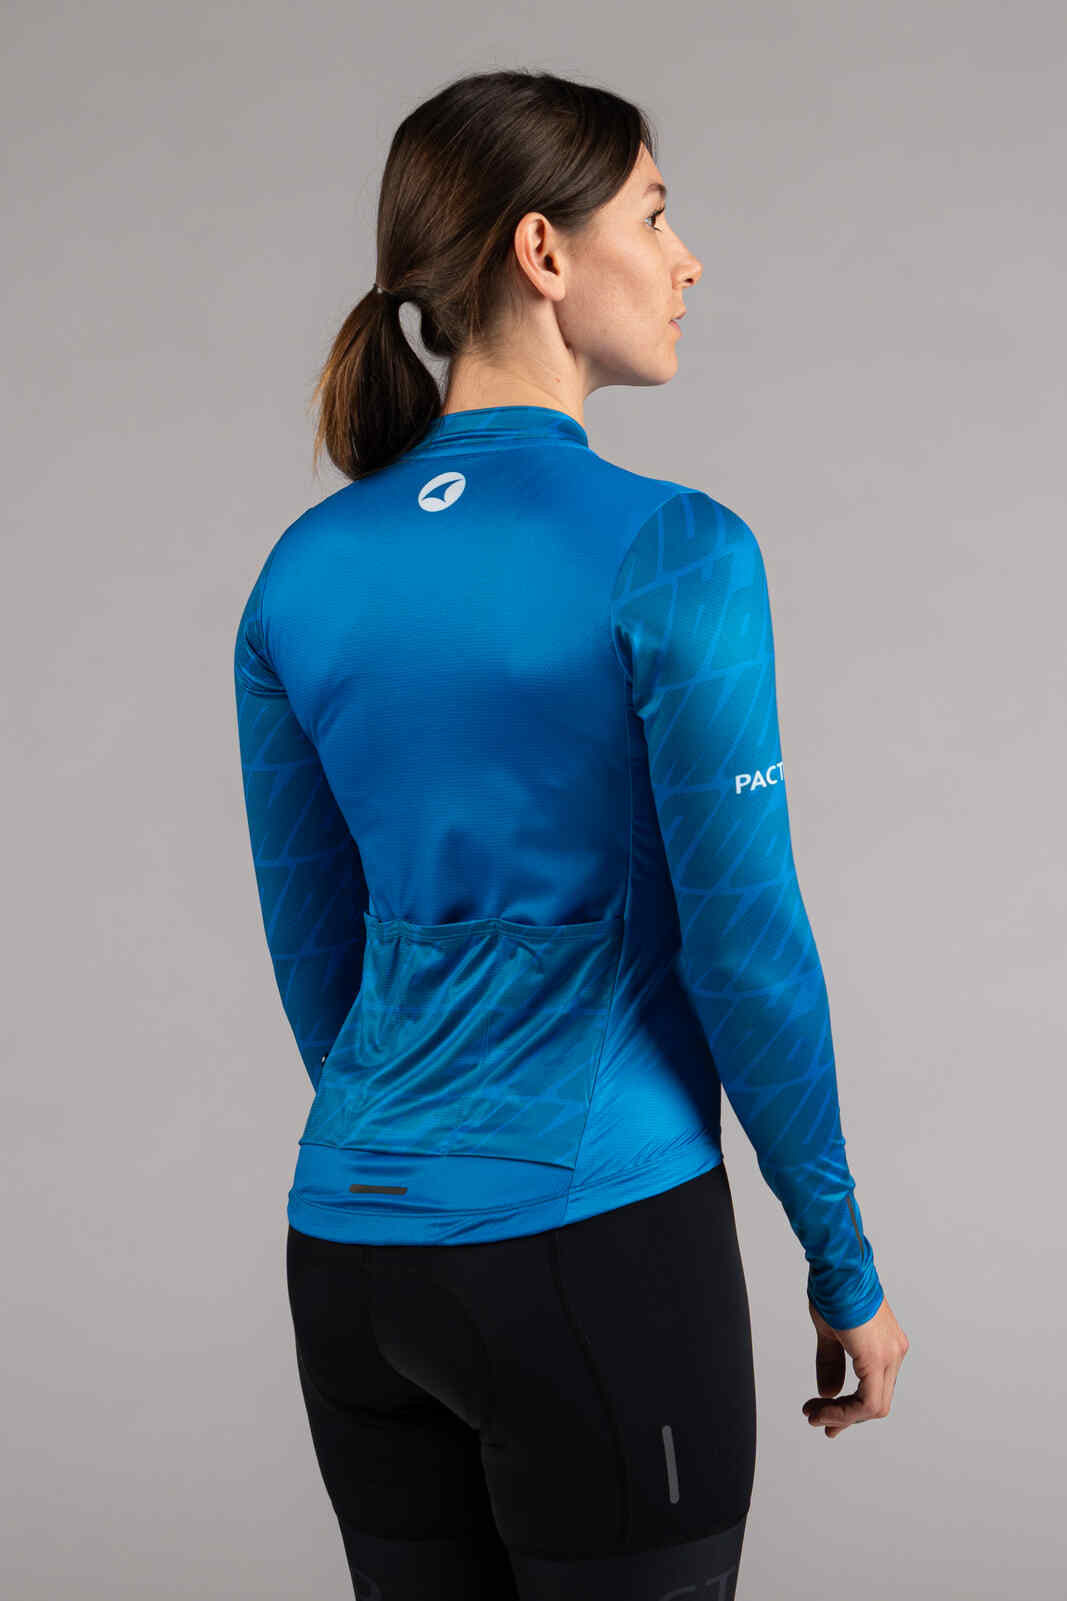 Women's Aero Long Sleeve Blue Cycling Jersey - Back View